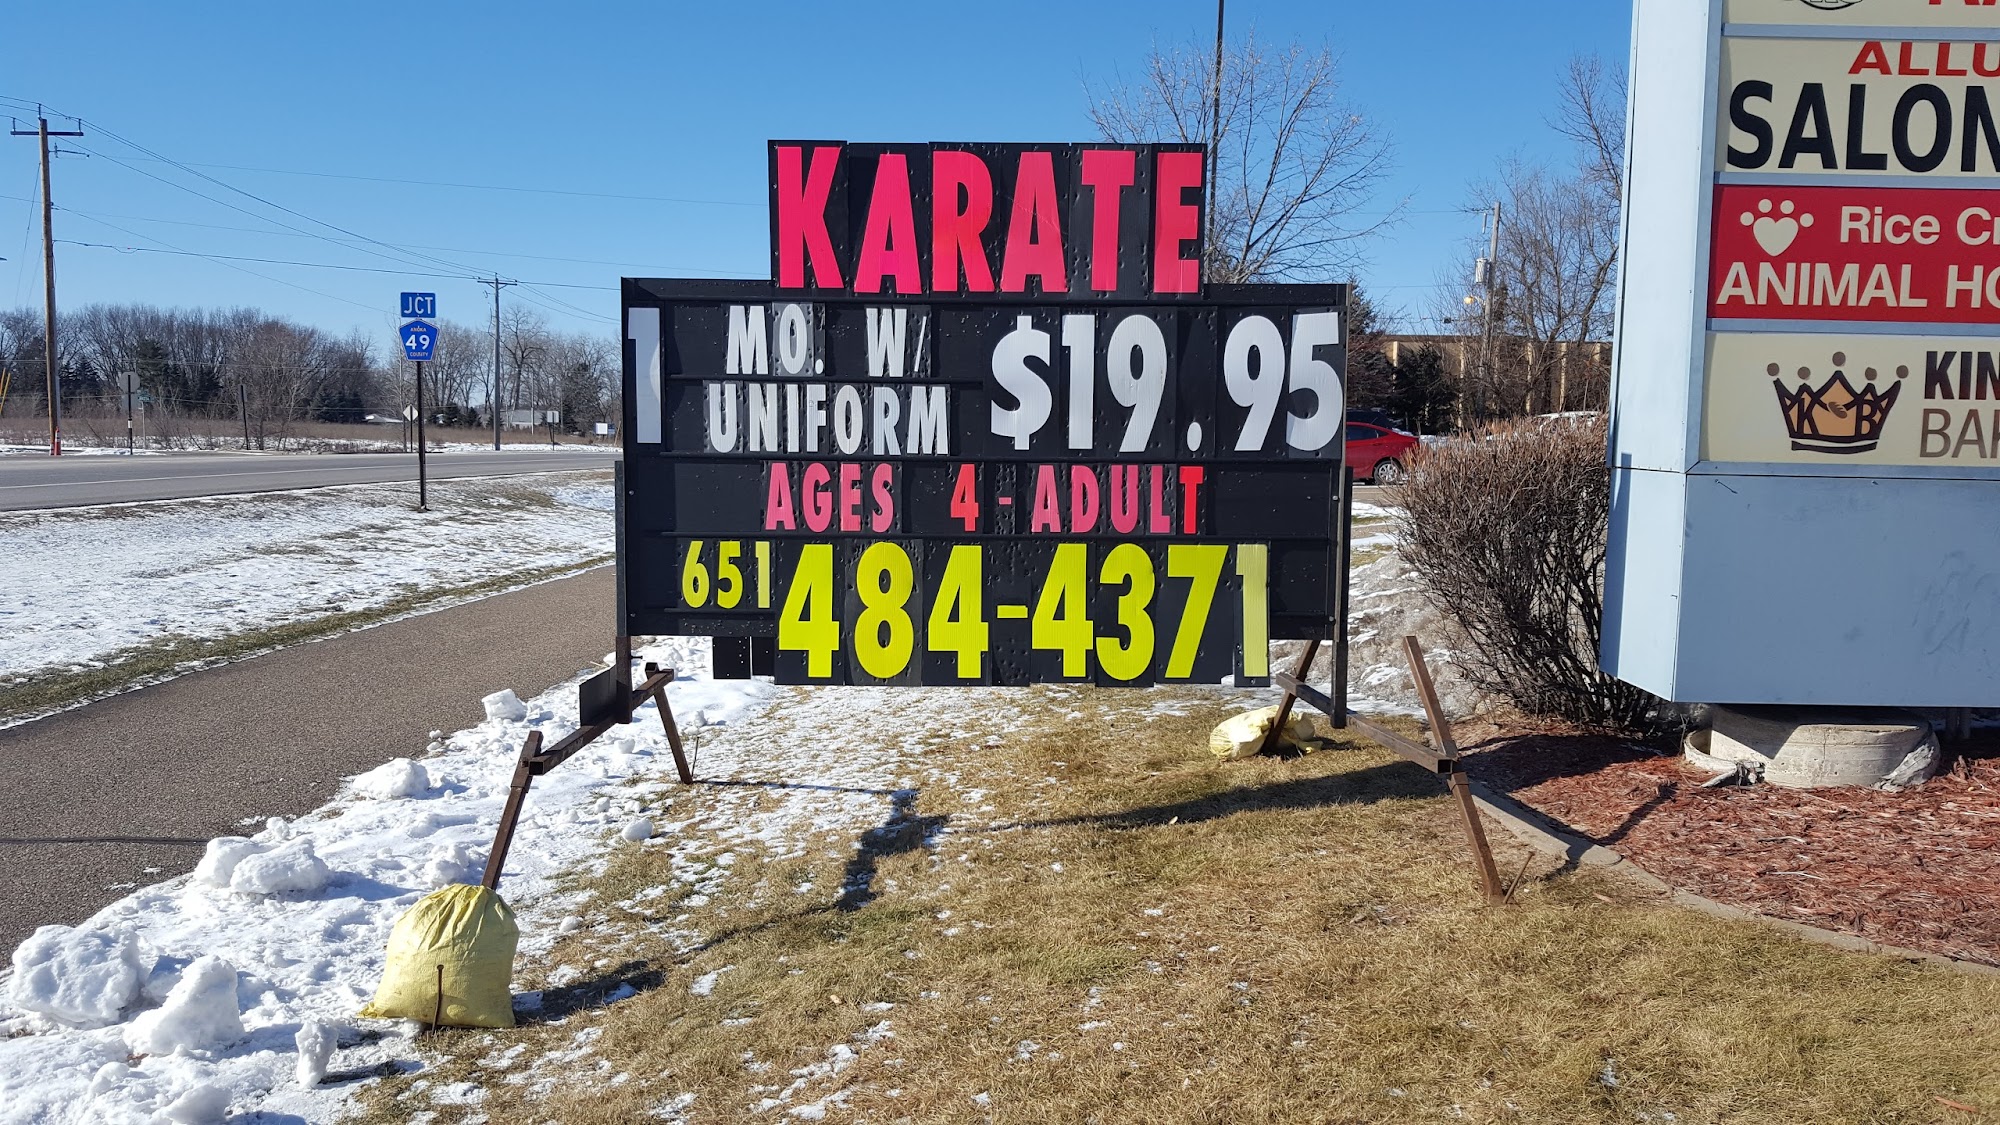 Professional Karate Studios 6511 Ware Rd #160, Circle Pines Minnesota 55014